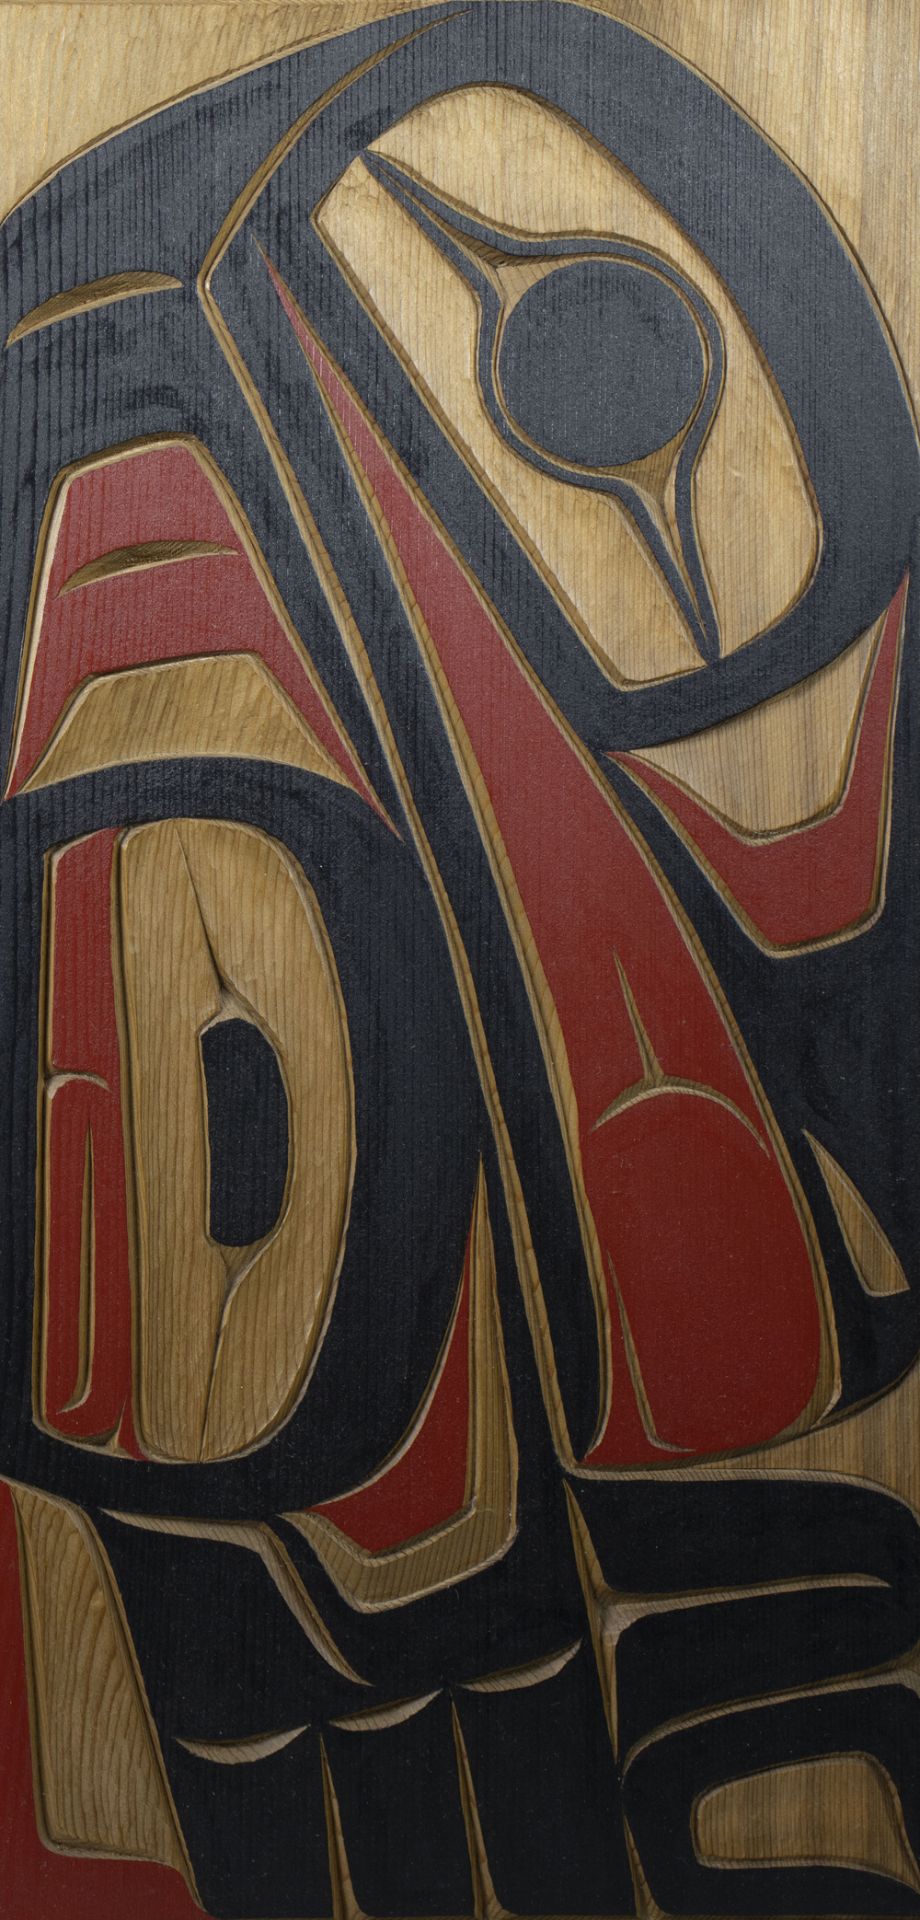 James ADAMS (20. Jh.), Holzrelief 'Rabe' / A wooden relief 'Raven', Canada, 1998 - Bild 2 aus 5